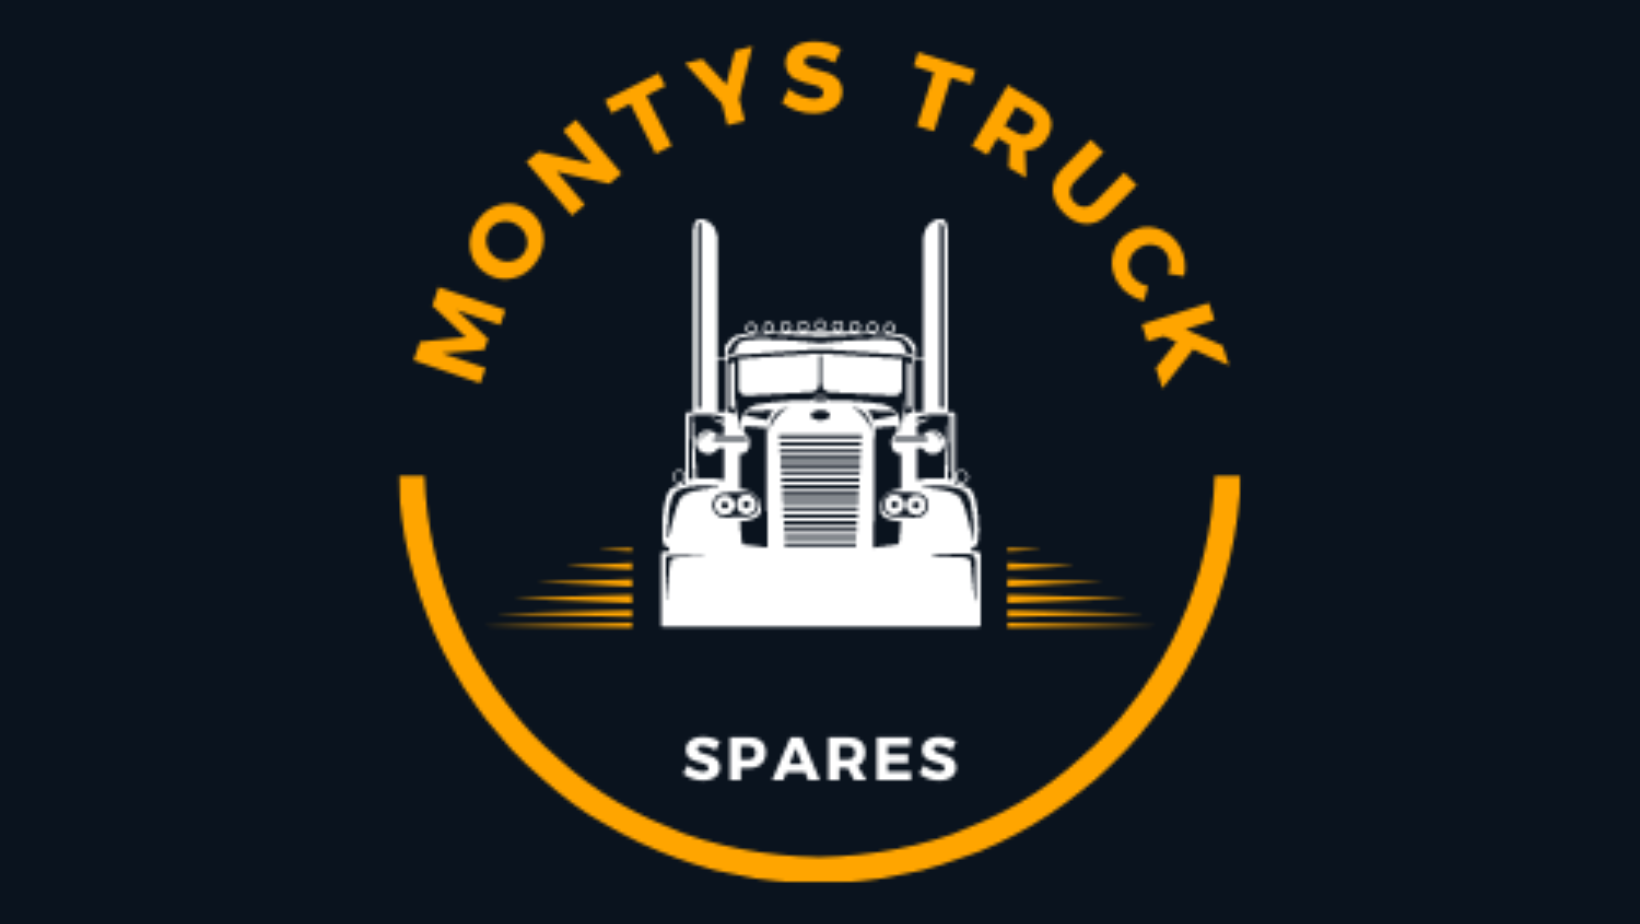 Montys Truck Spares